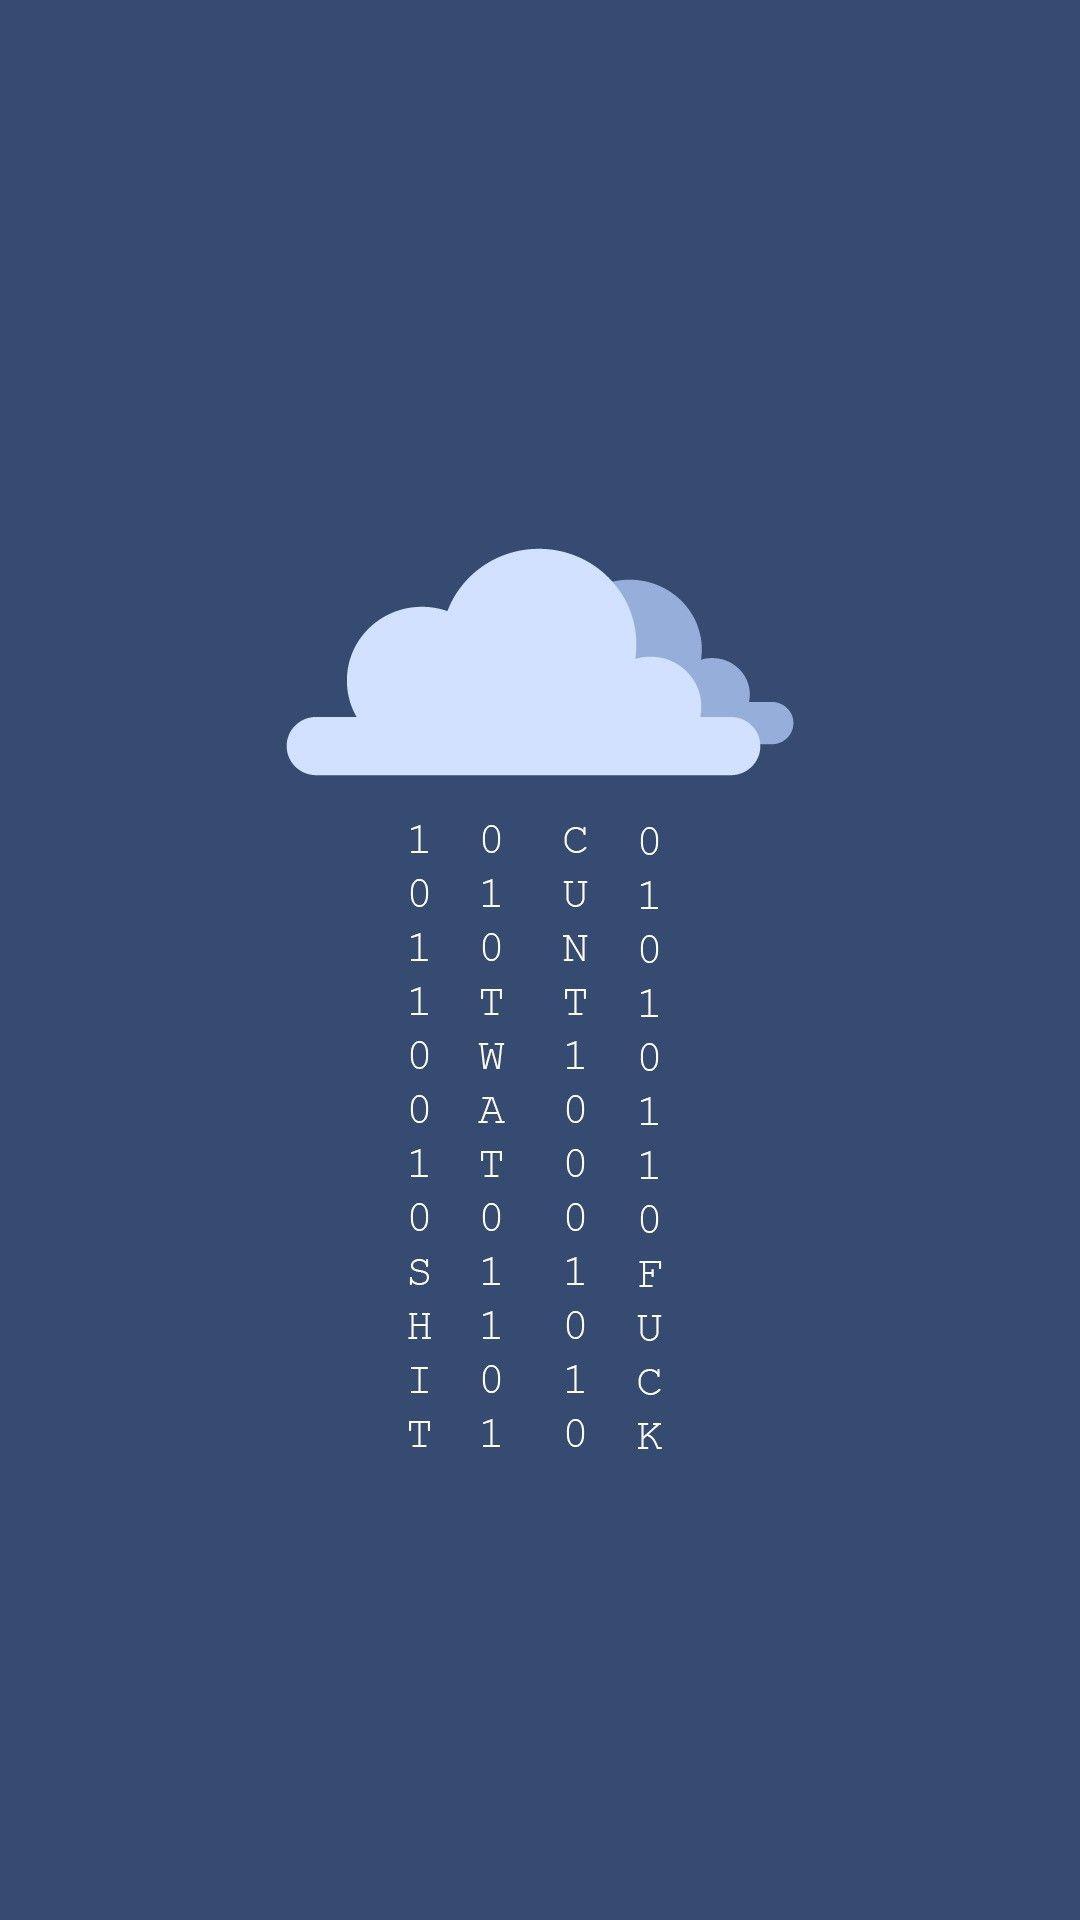 Minimal Cloud Typography Smartphone Wallpaper and Lockscreen